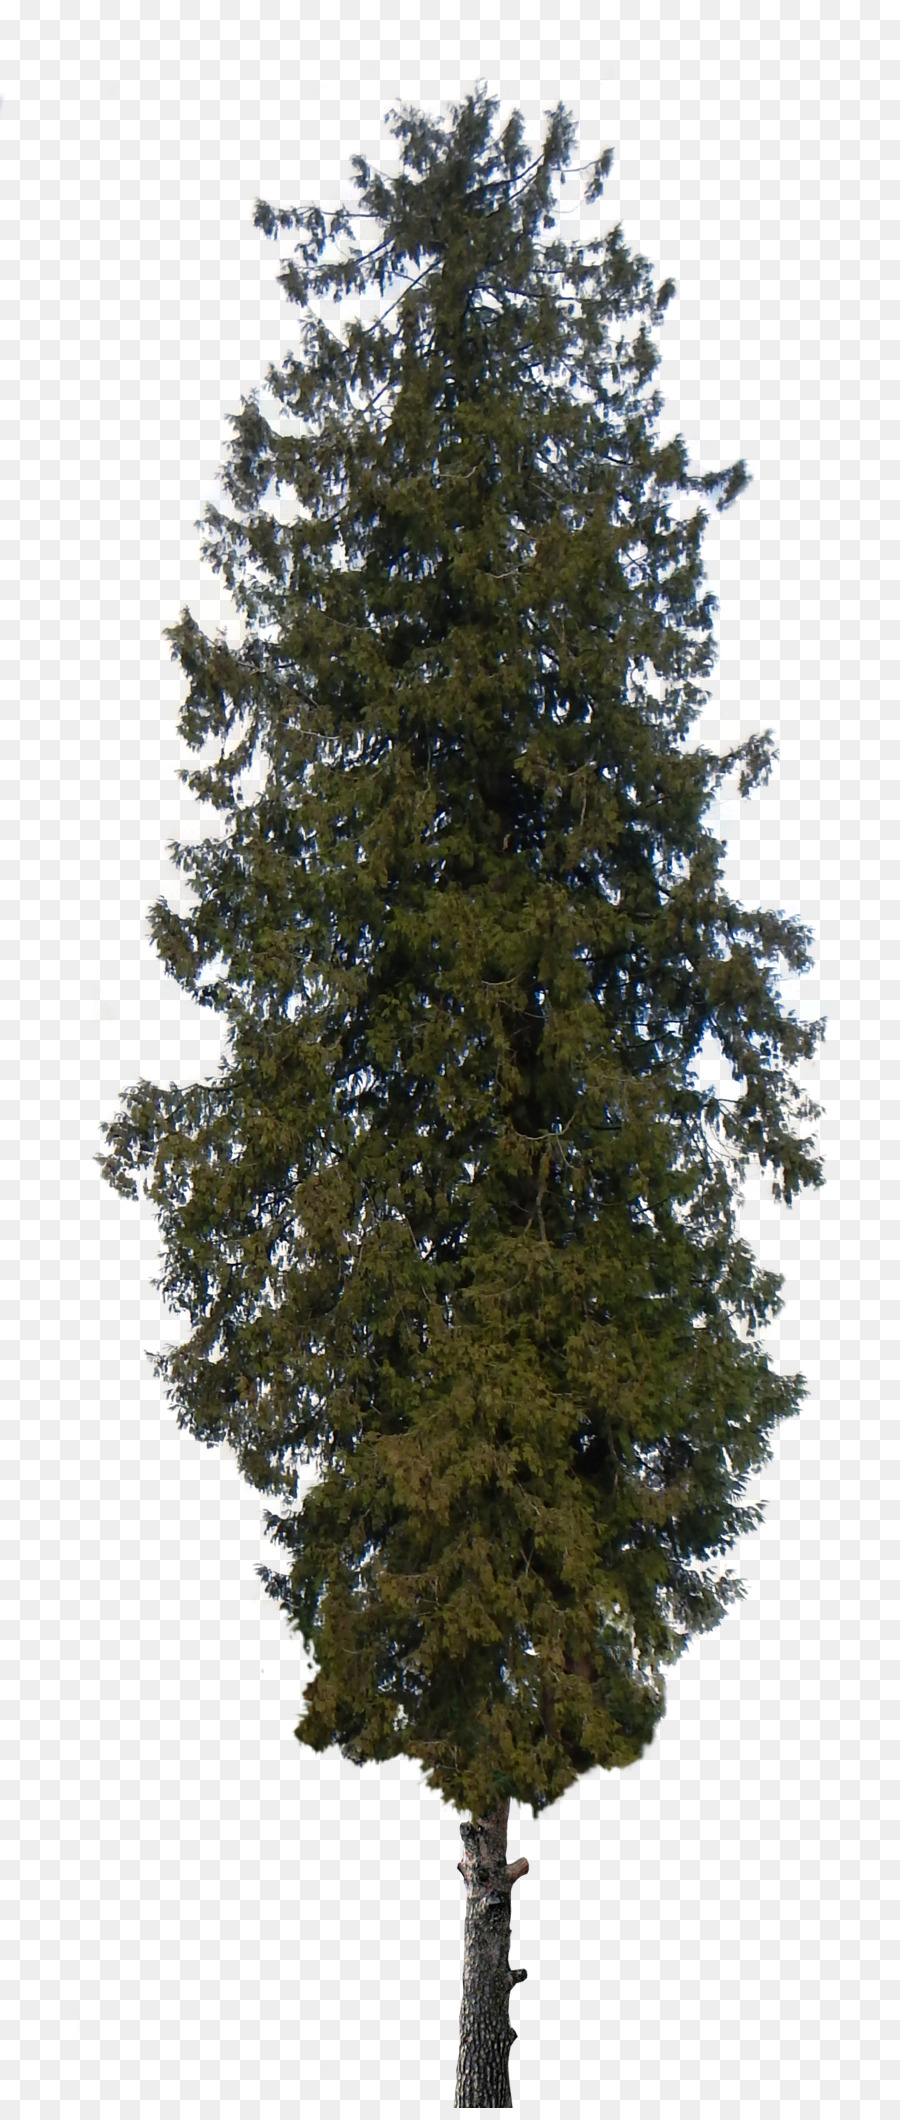 Pine Tree Shrub Cedar Clip art - pine tree png download - 1434*3358 - Free Transparent Pine png Download.